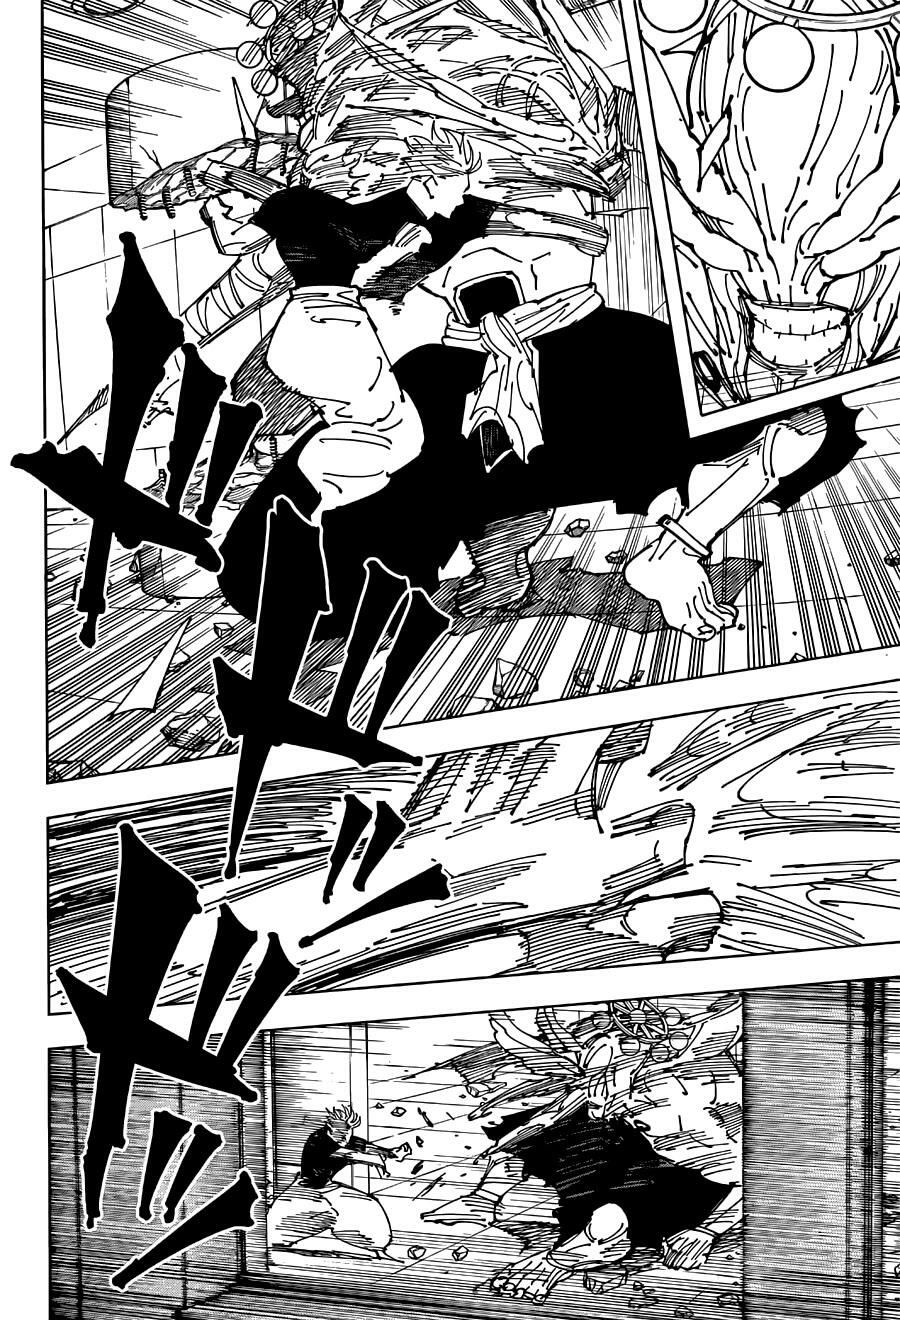 Jujutsu Kaisen Chapter 233: The Decisive Battle In The Uninhabited, Demon-Infested Shinjuku ⑪ page 5 - Mangakakalot